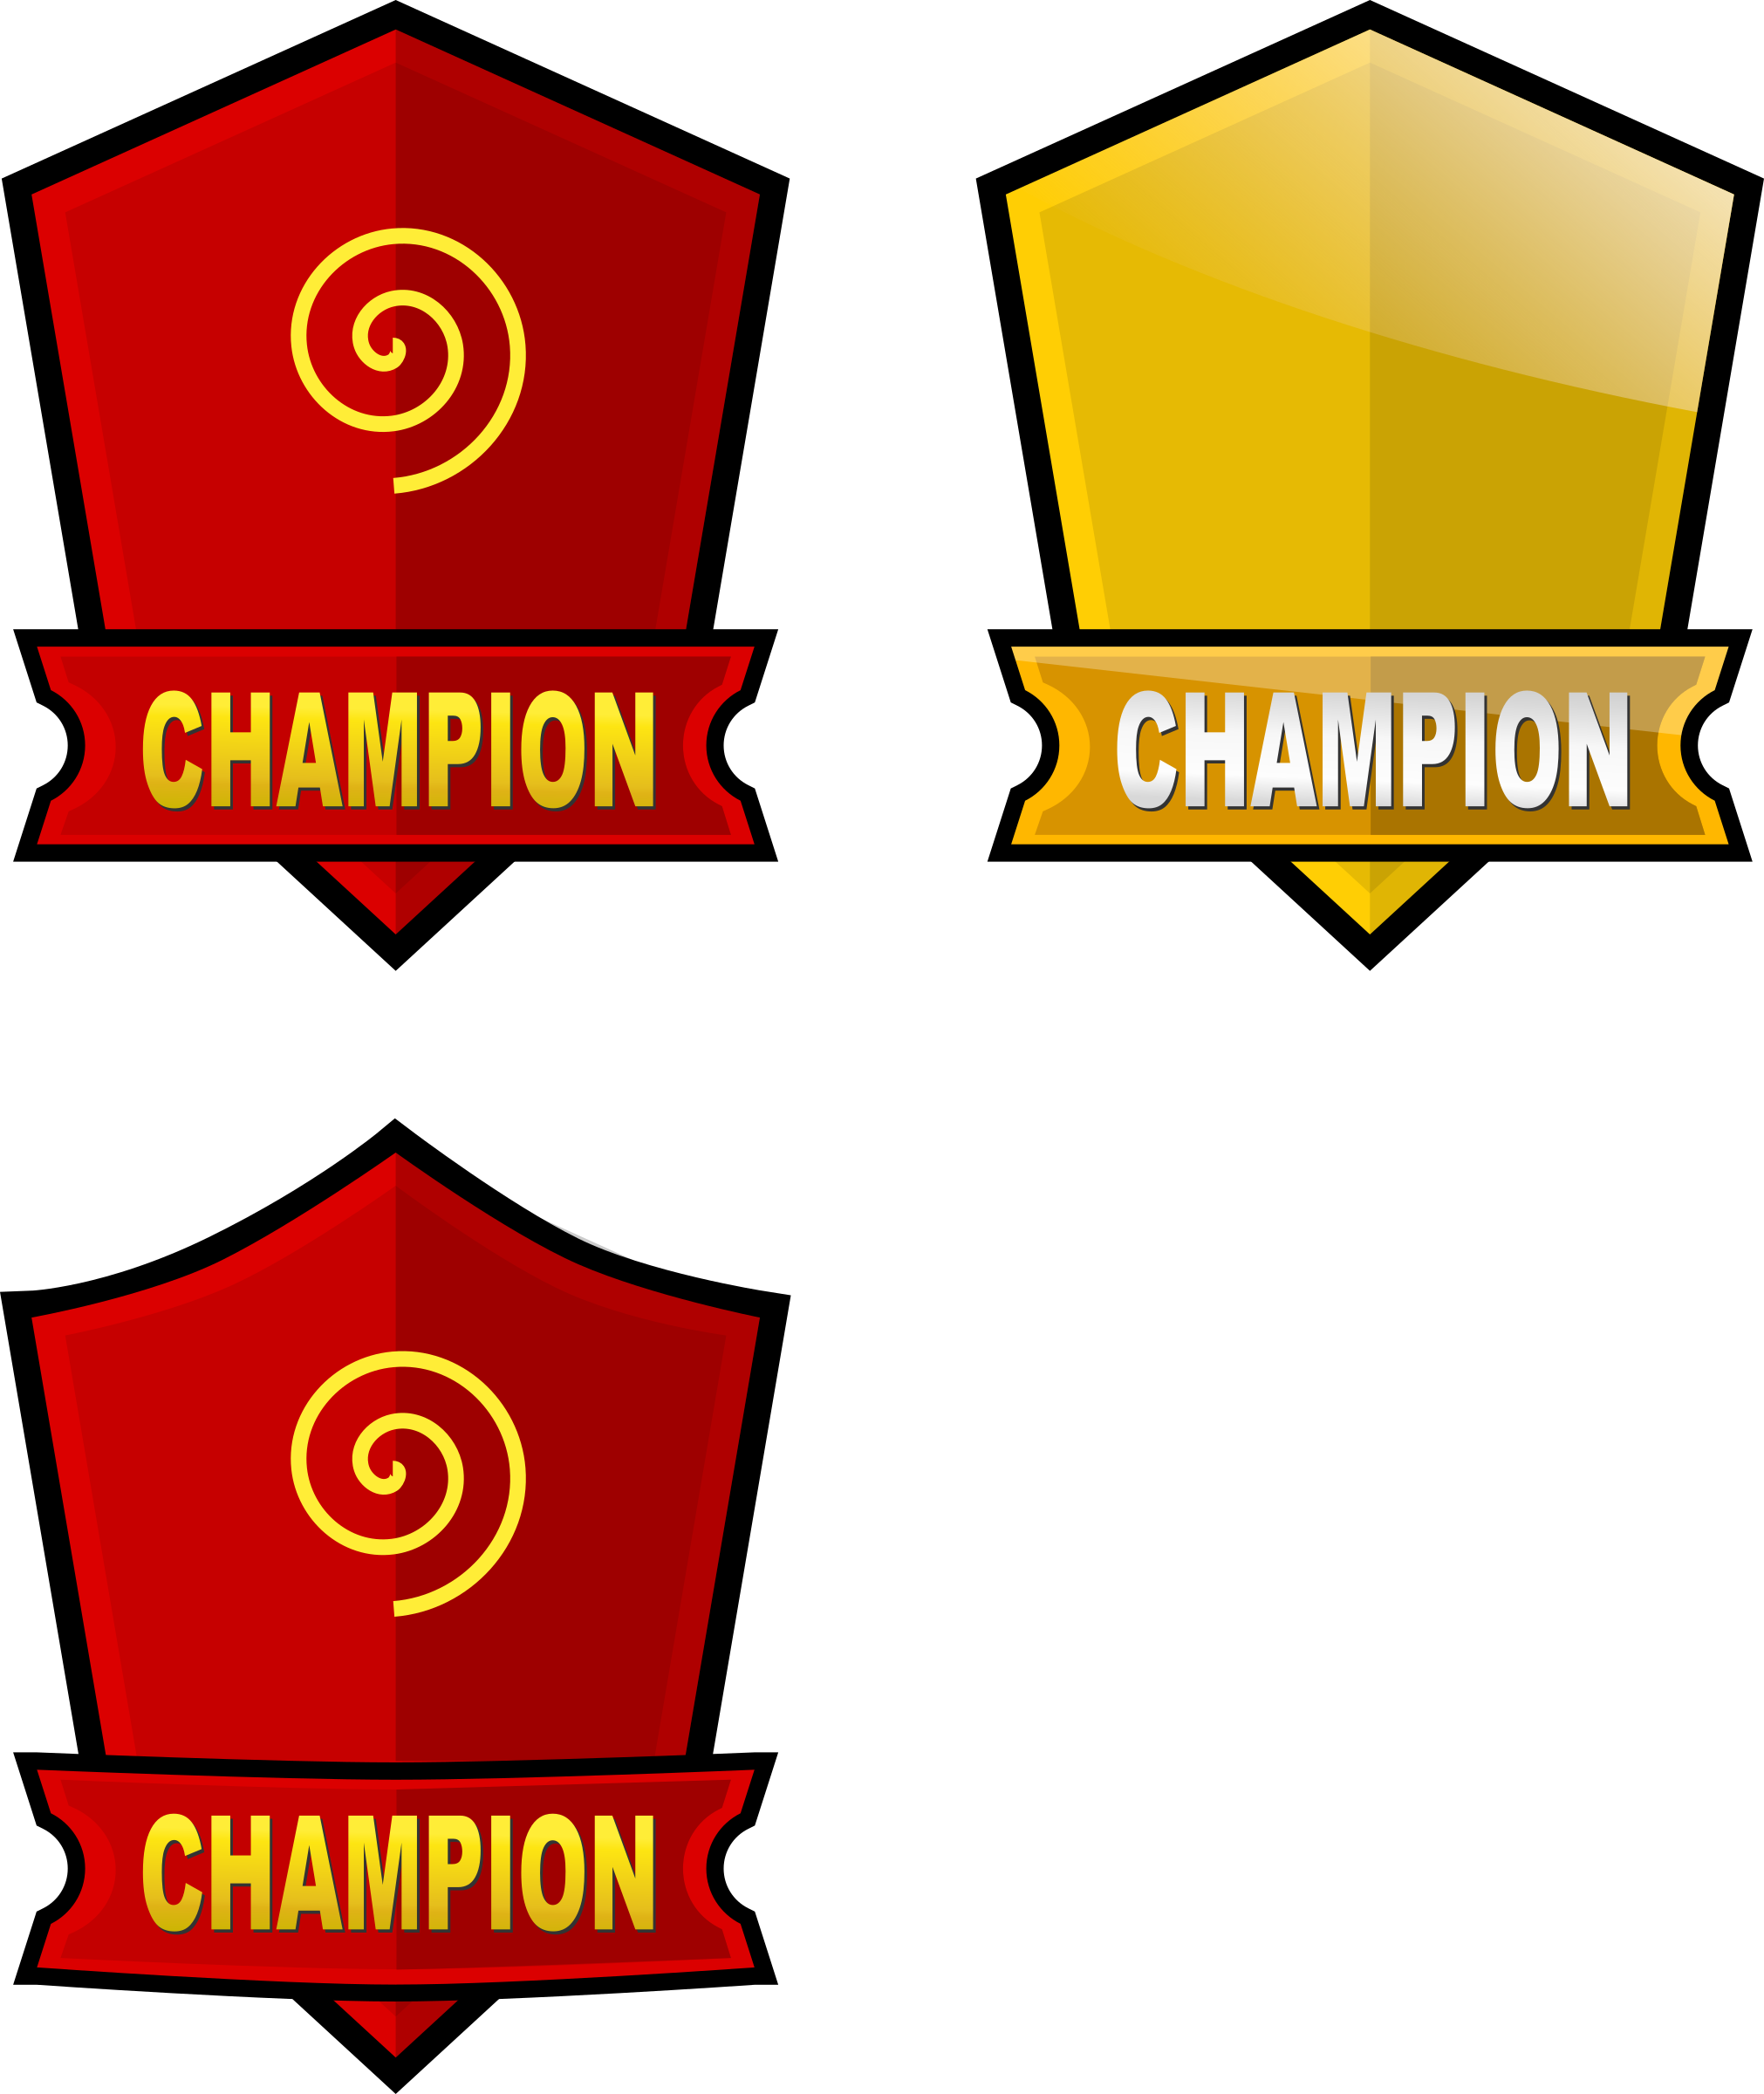 clipart banner shield